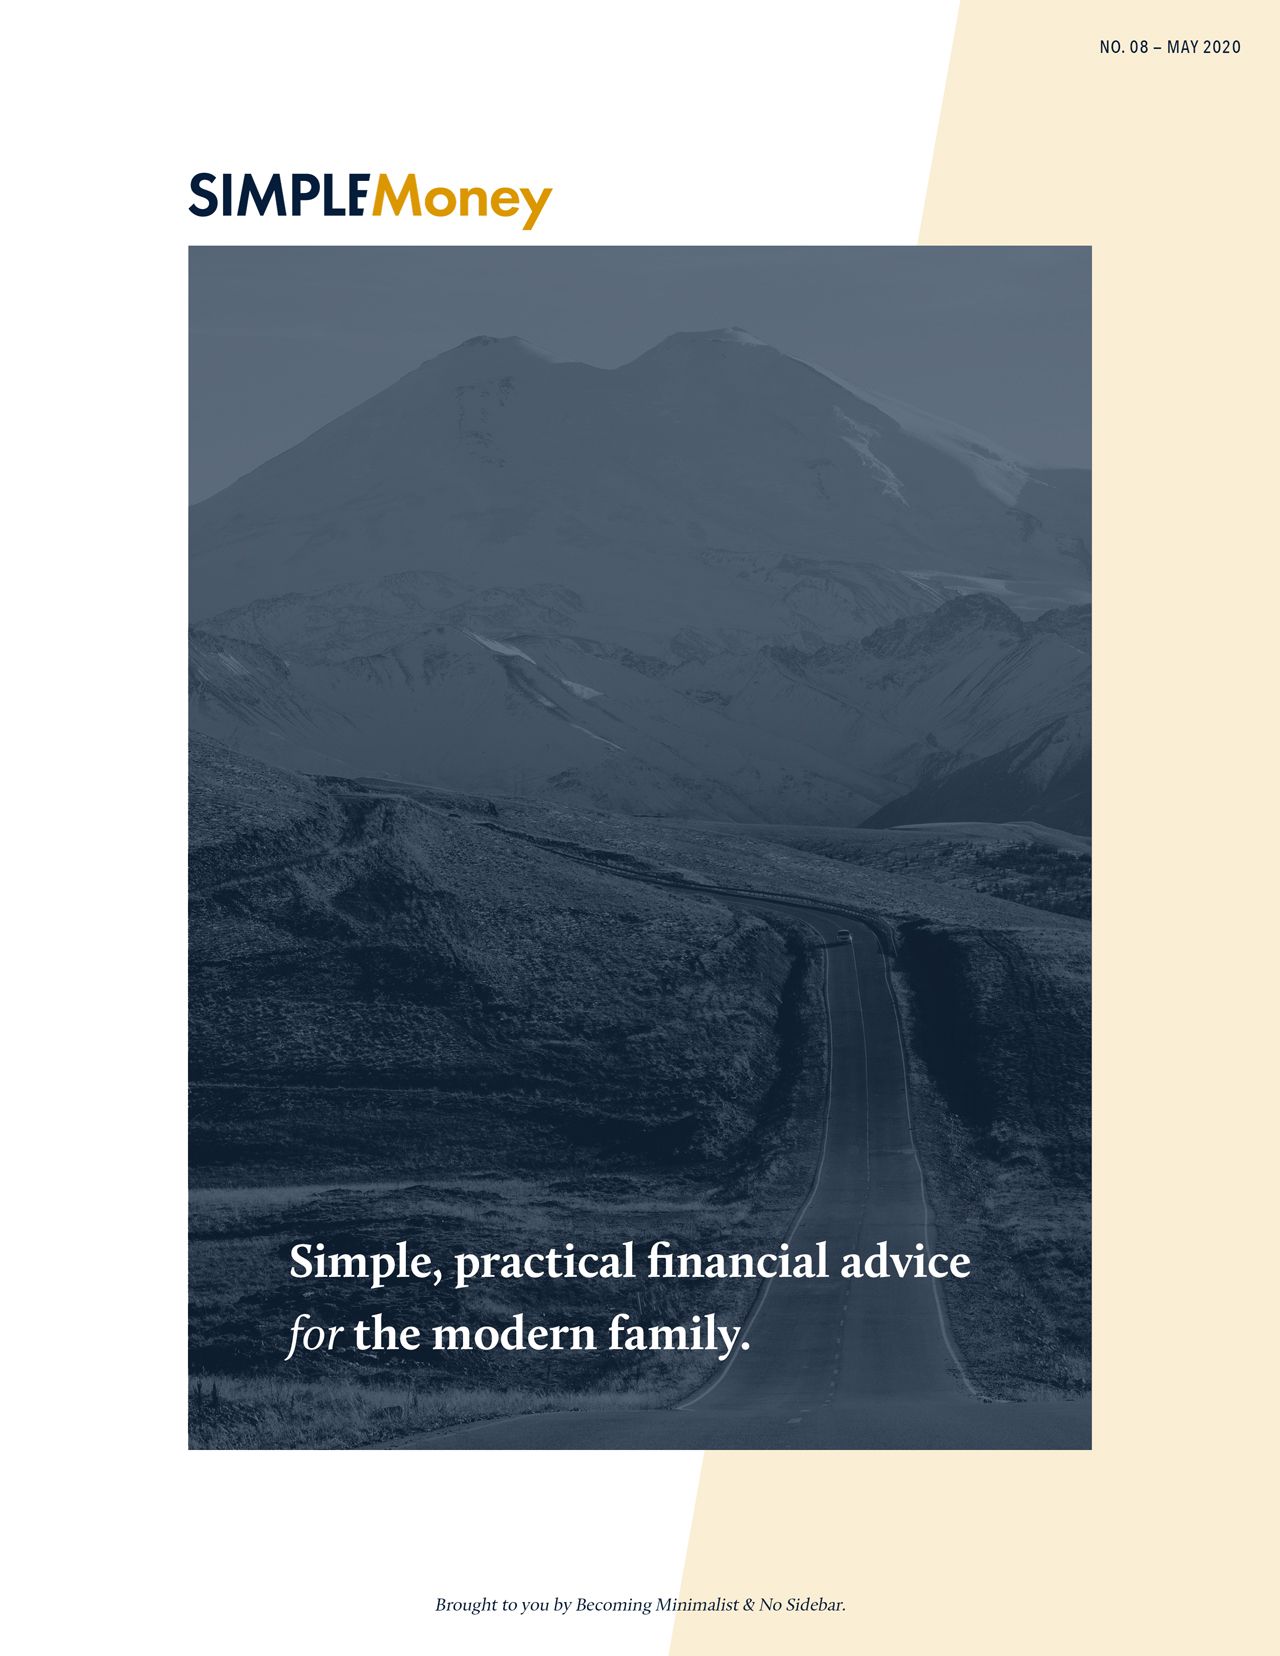 Simple Money Magazine Issue #08